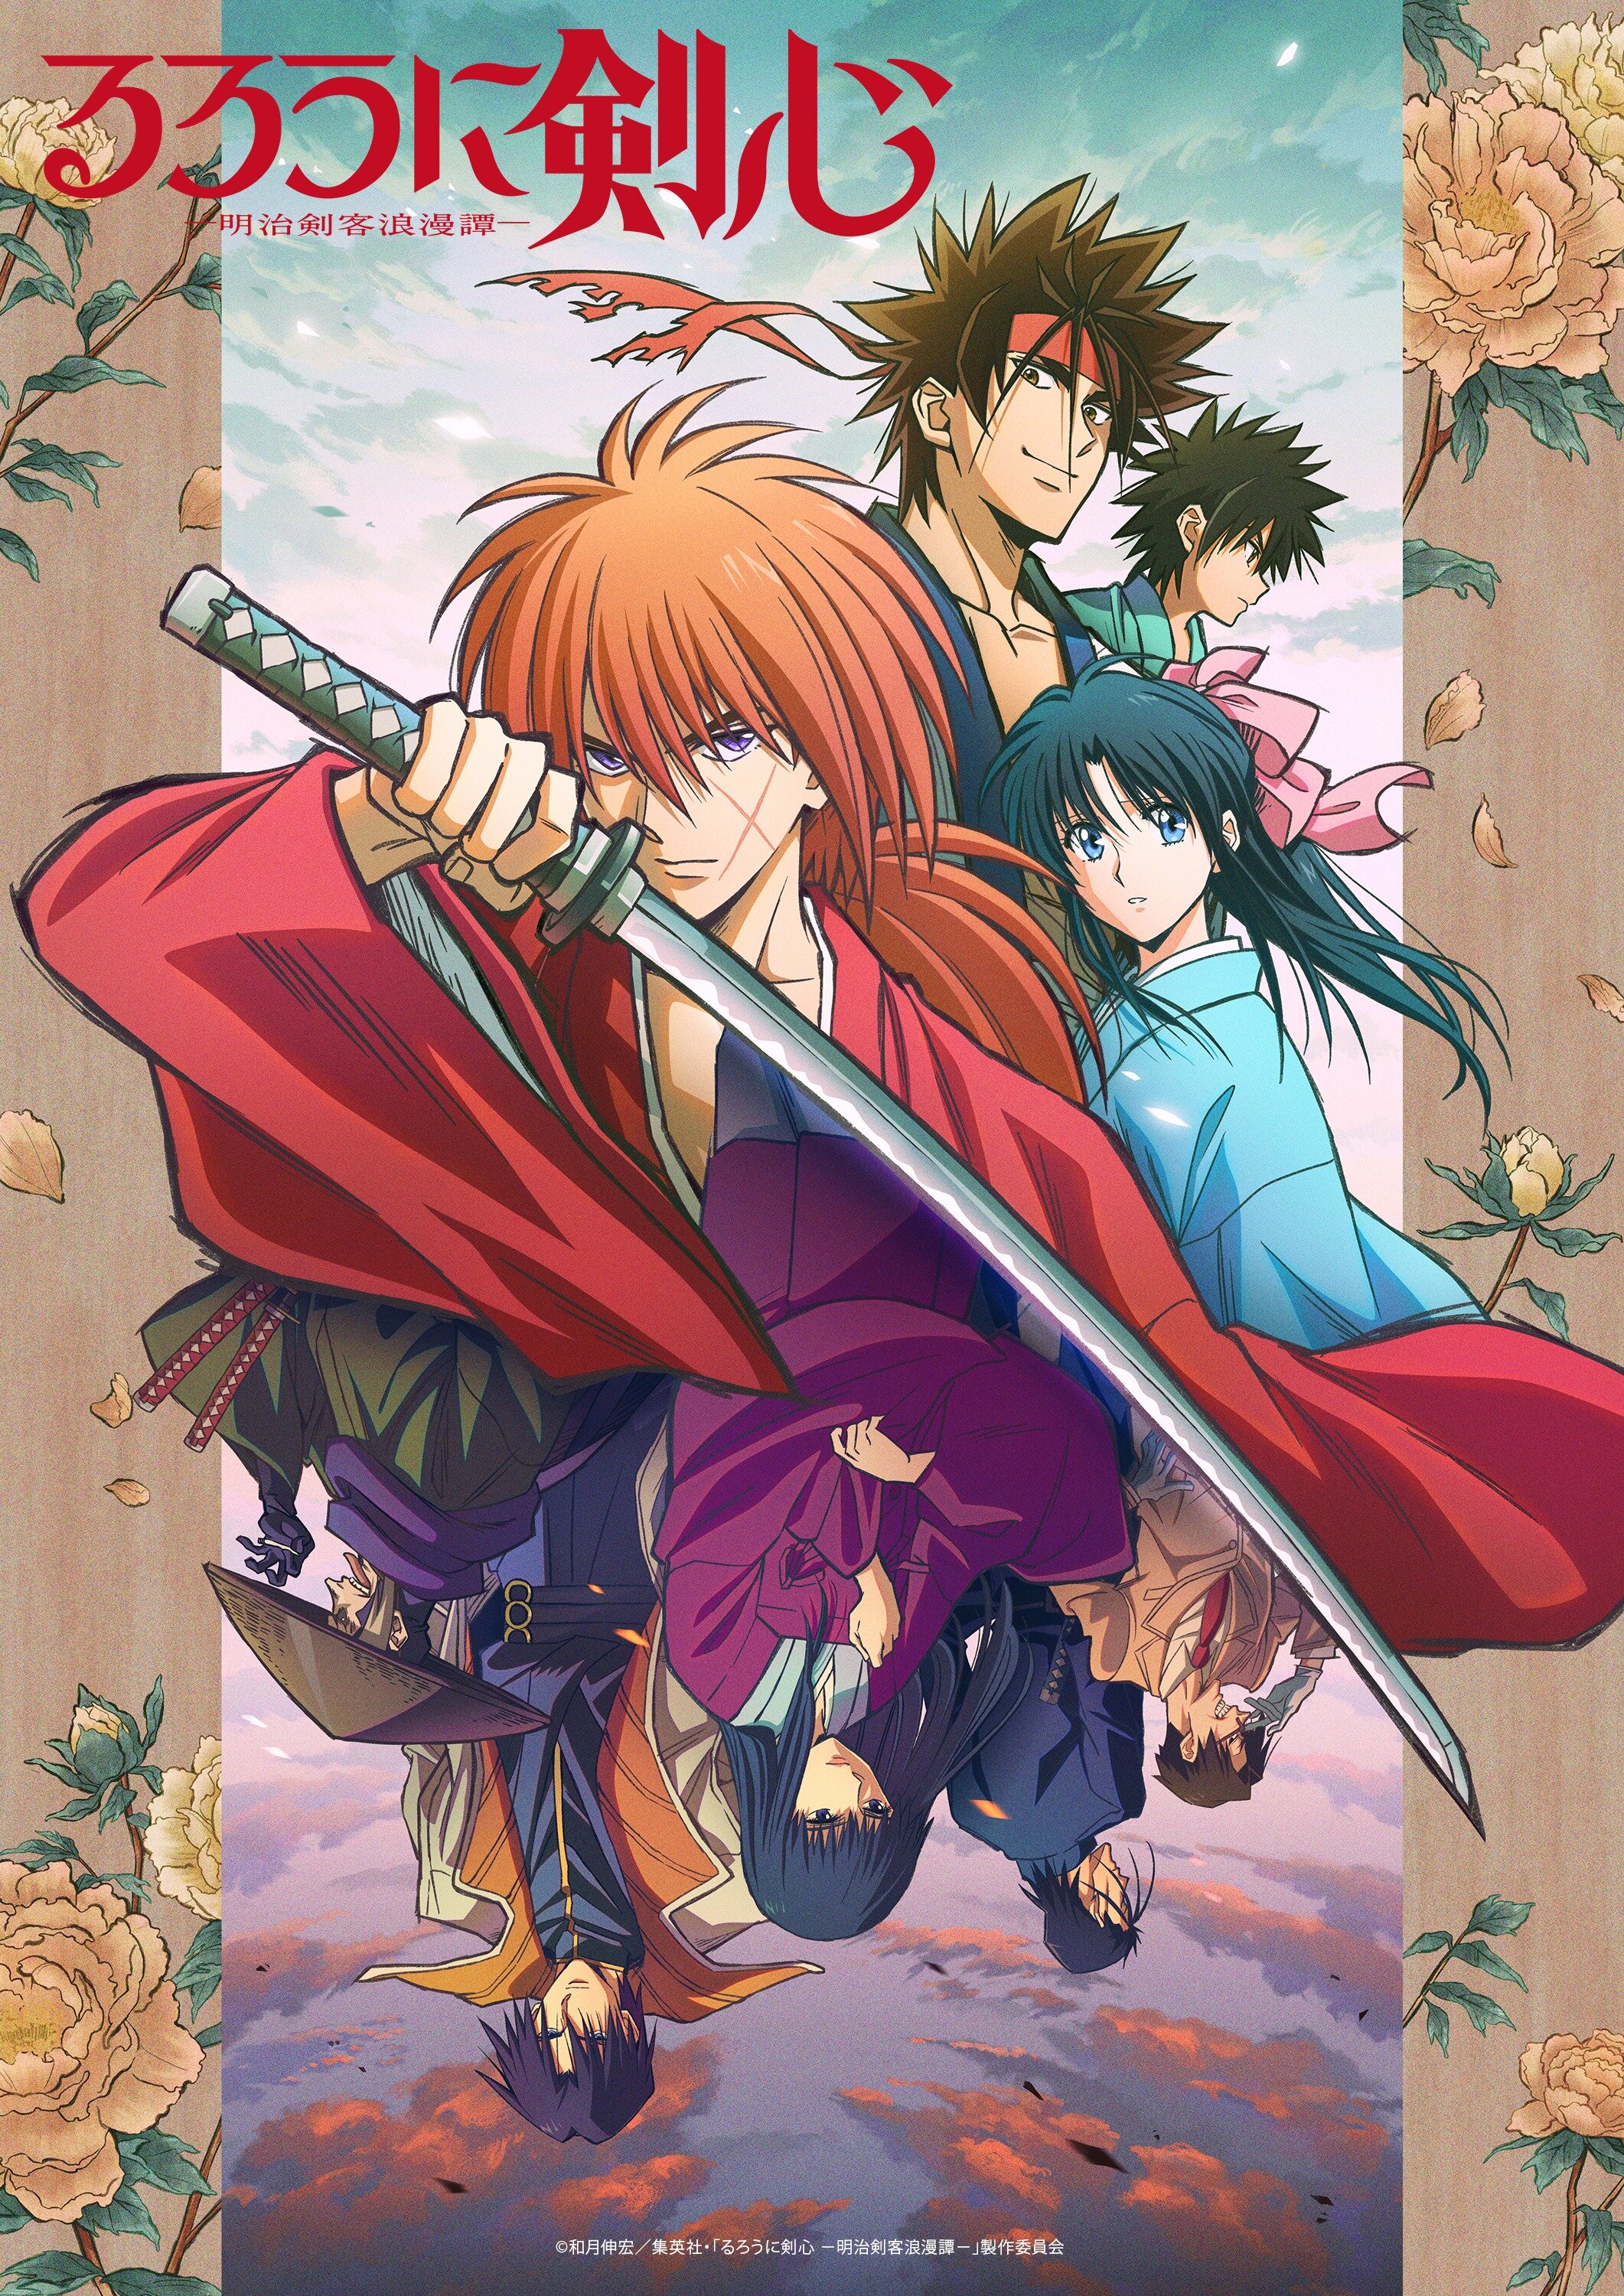 Rurouni Kenshin: Meiji Kenkaku Romantan ne zaman